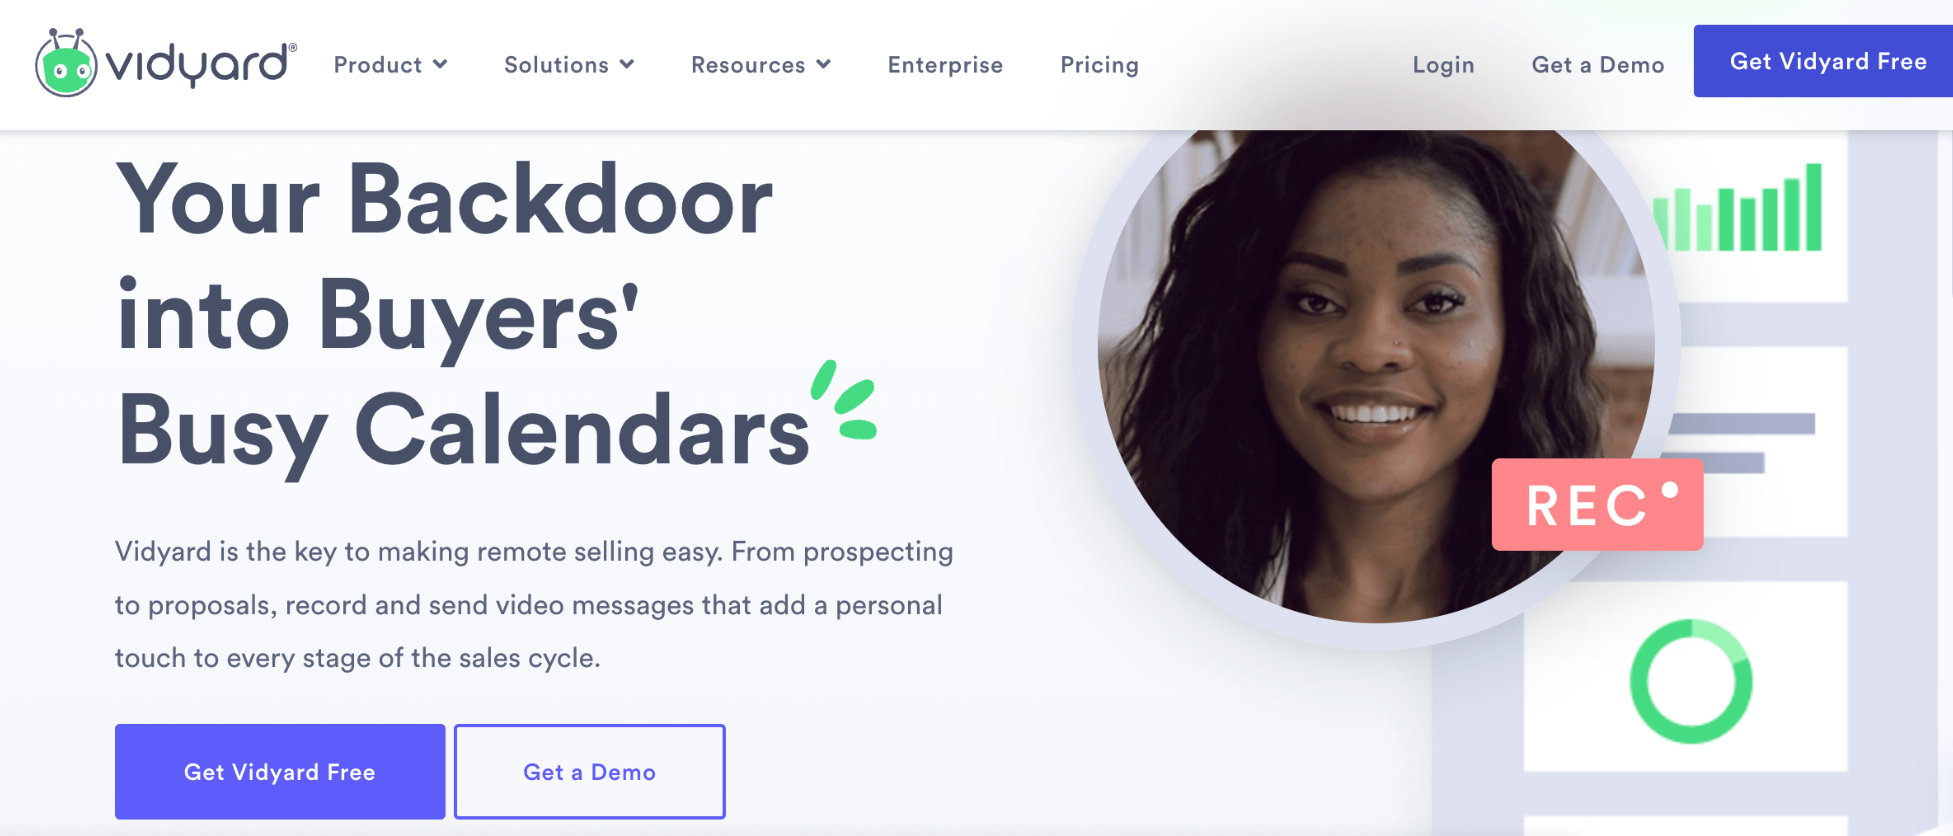 Vidyard homepage: Your Backdoor into Buyers' Busy Calendars